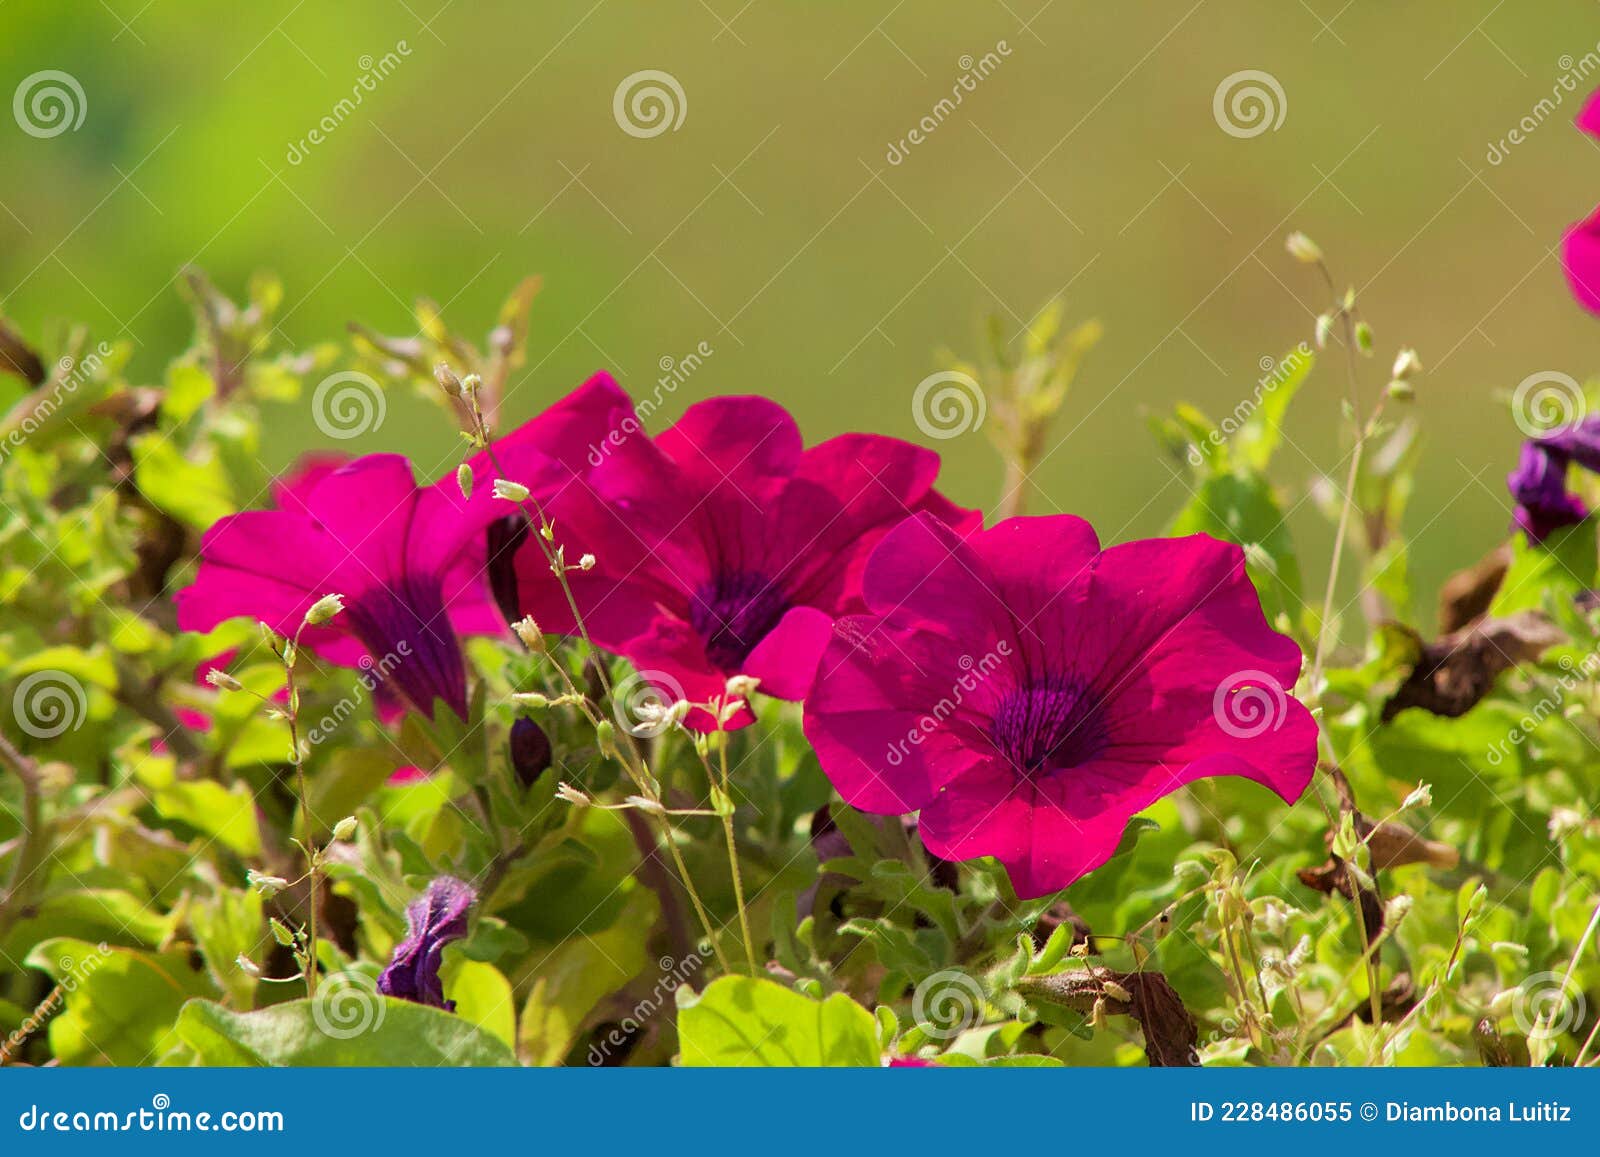 tris di fiori di colore rosa